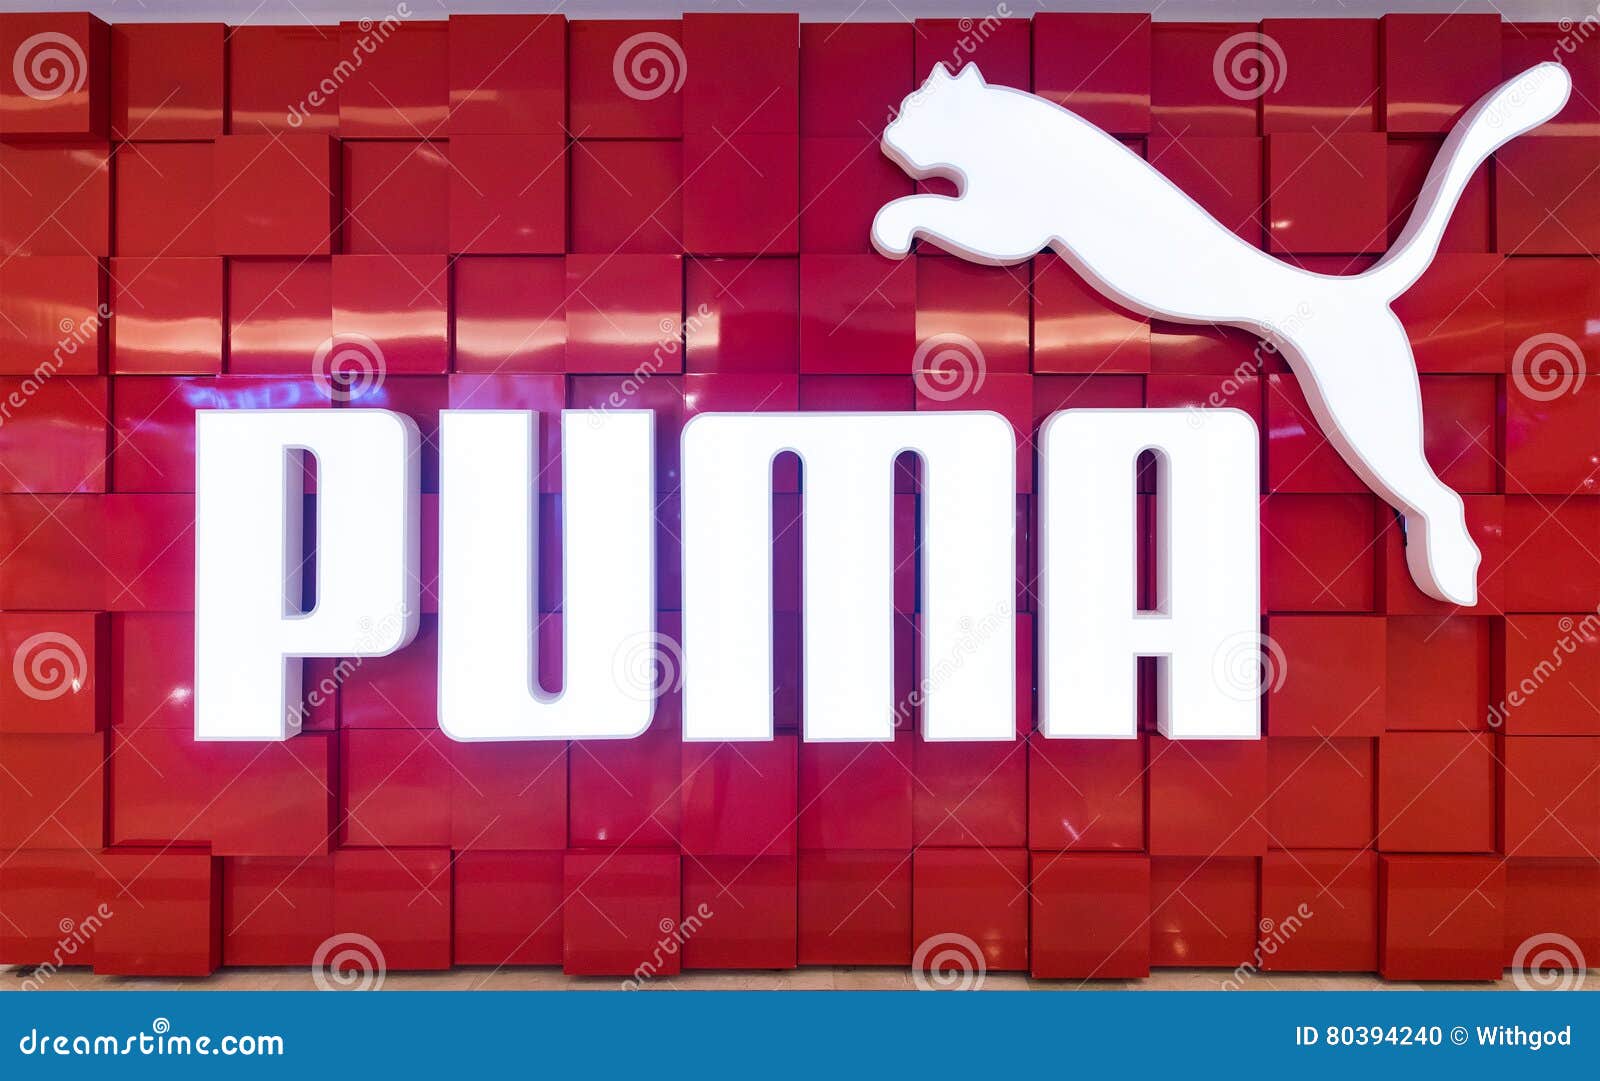 puma official store malaysia